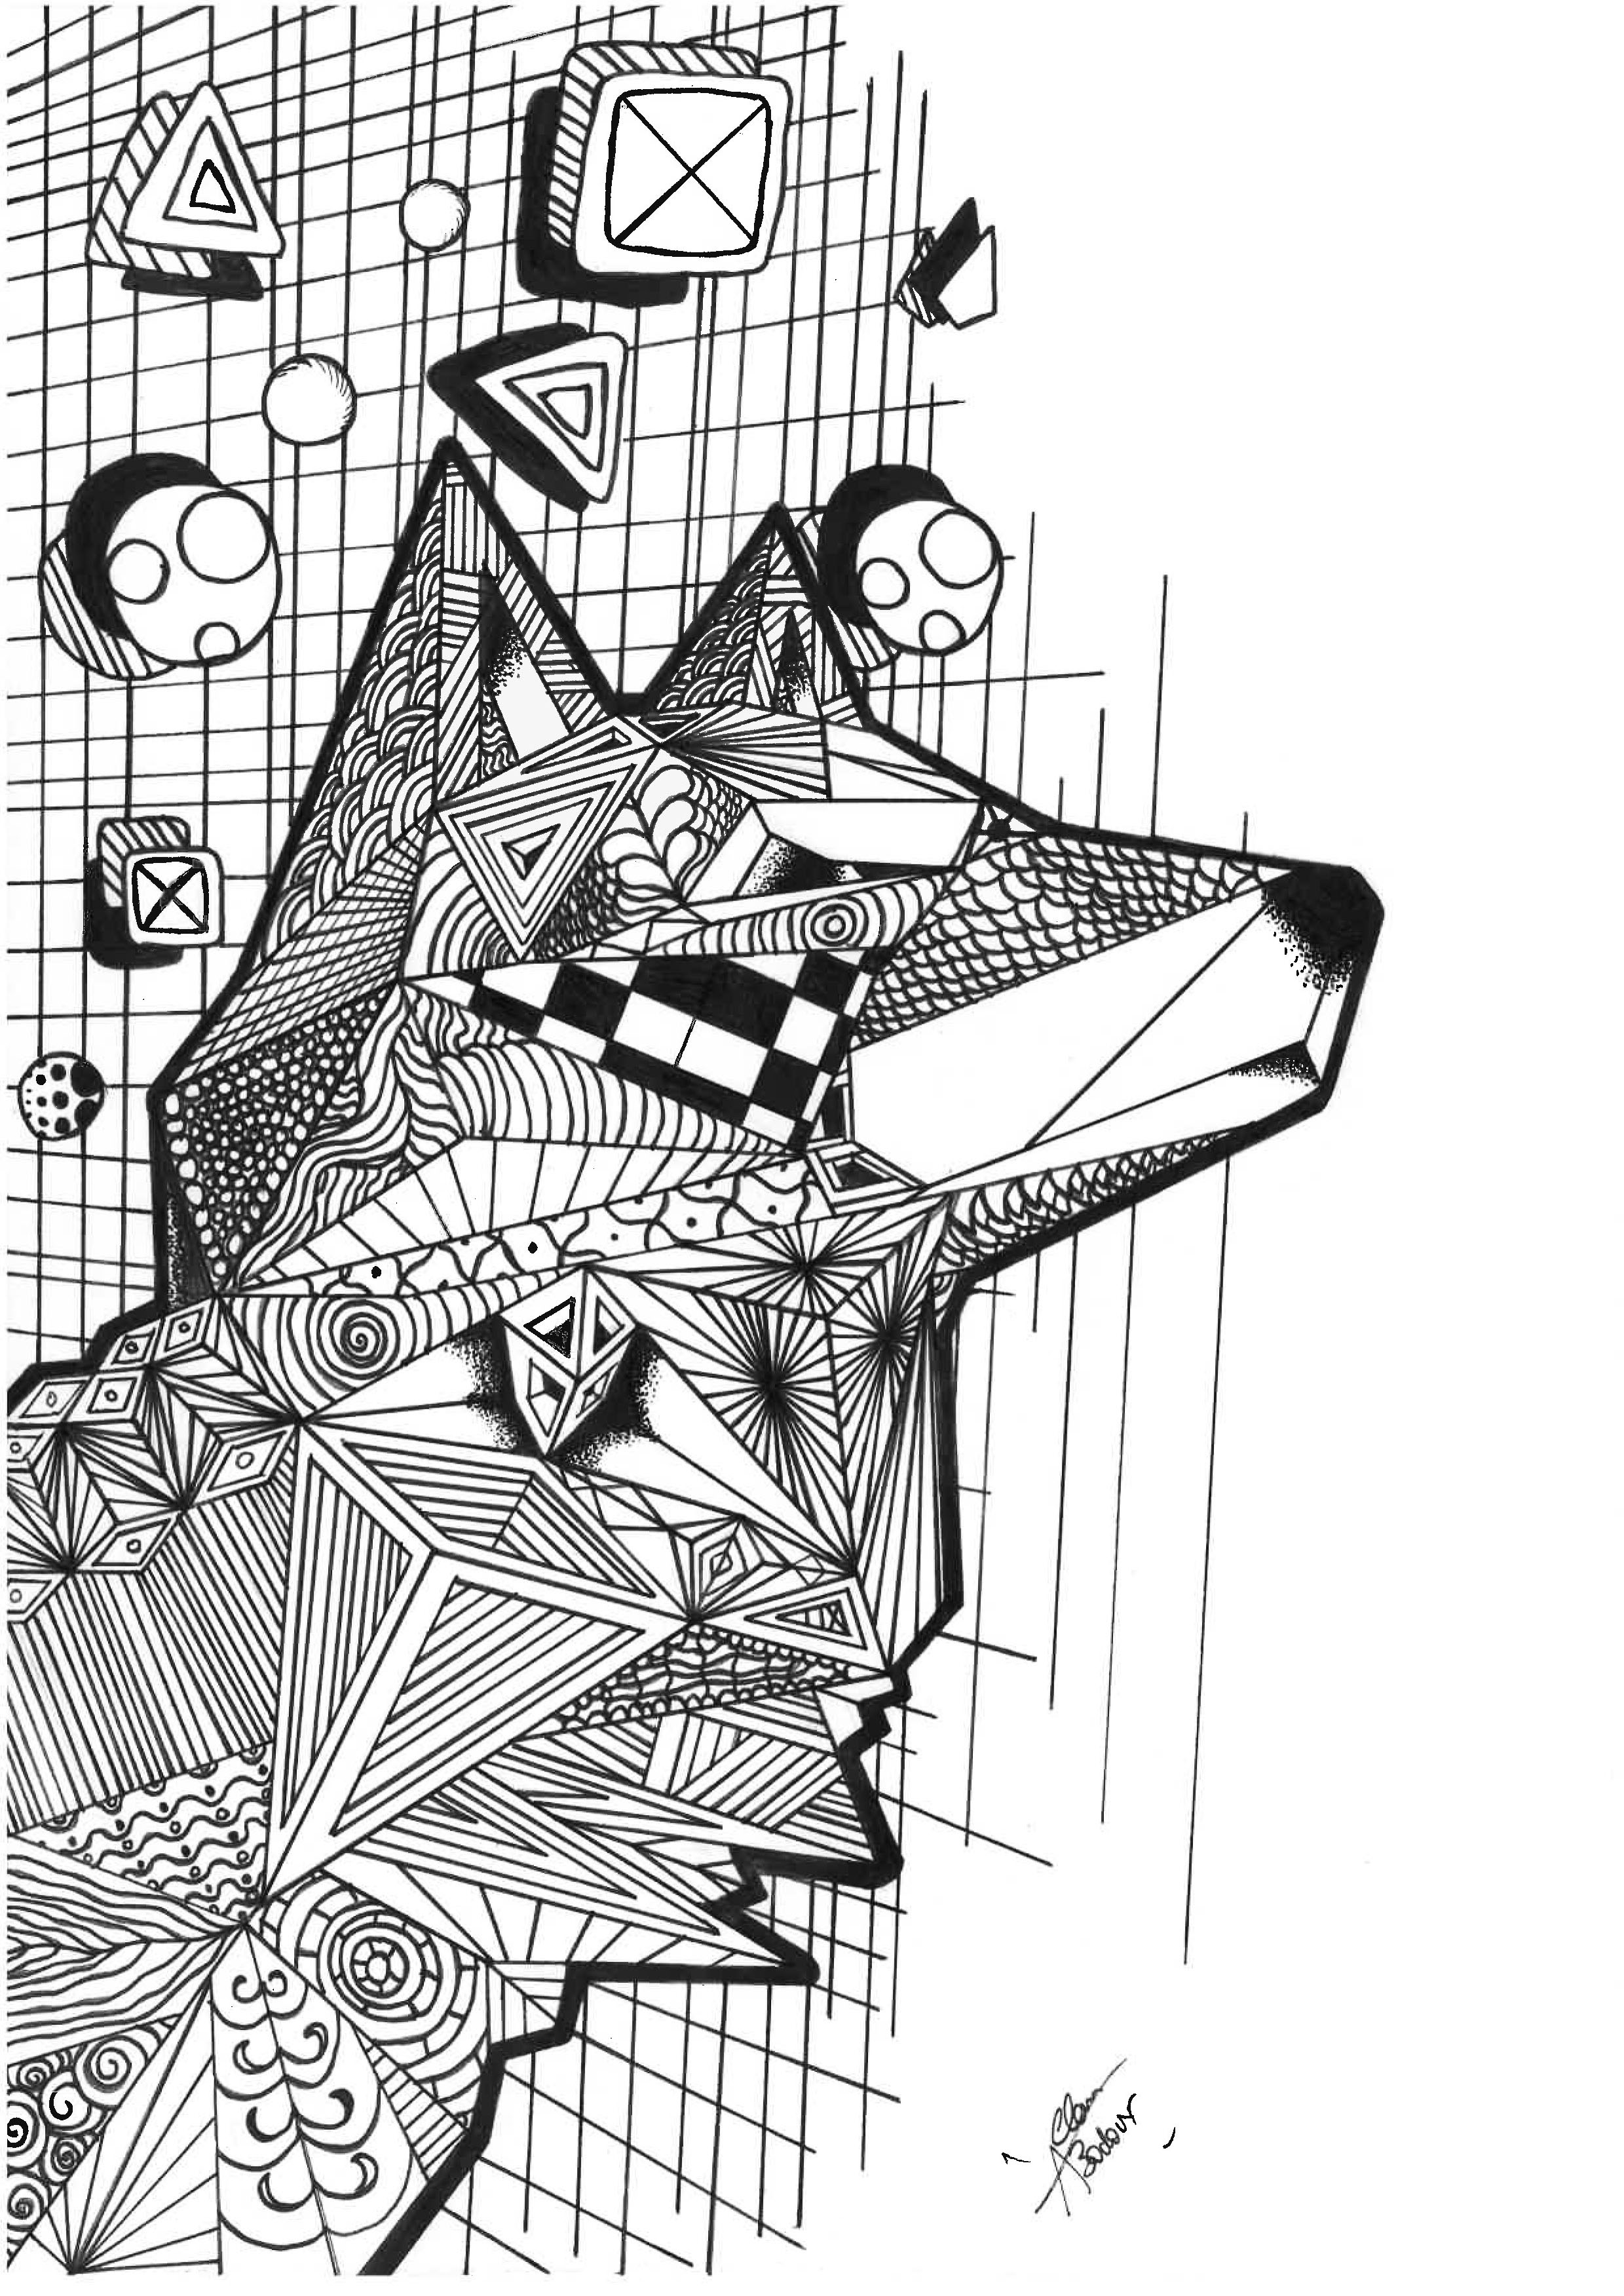 Wolf head with geometric patterns, Artist : Allan